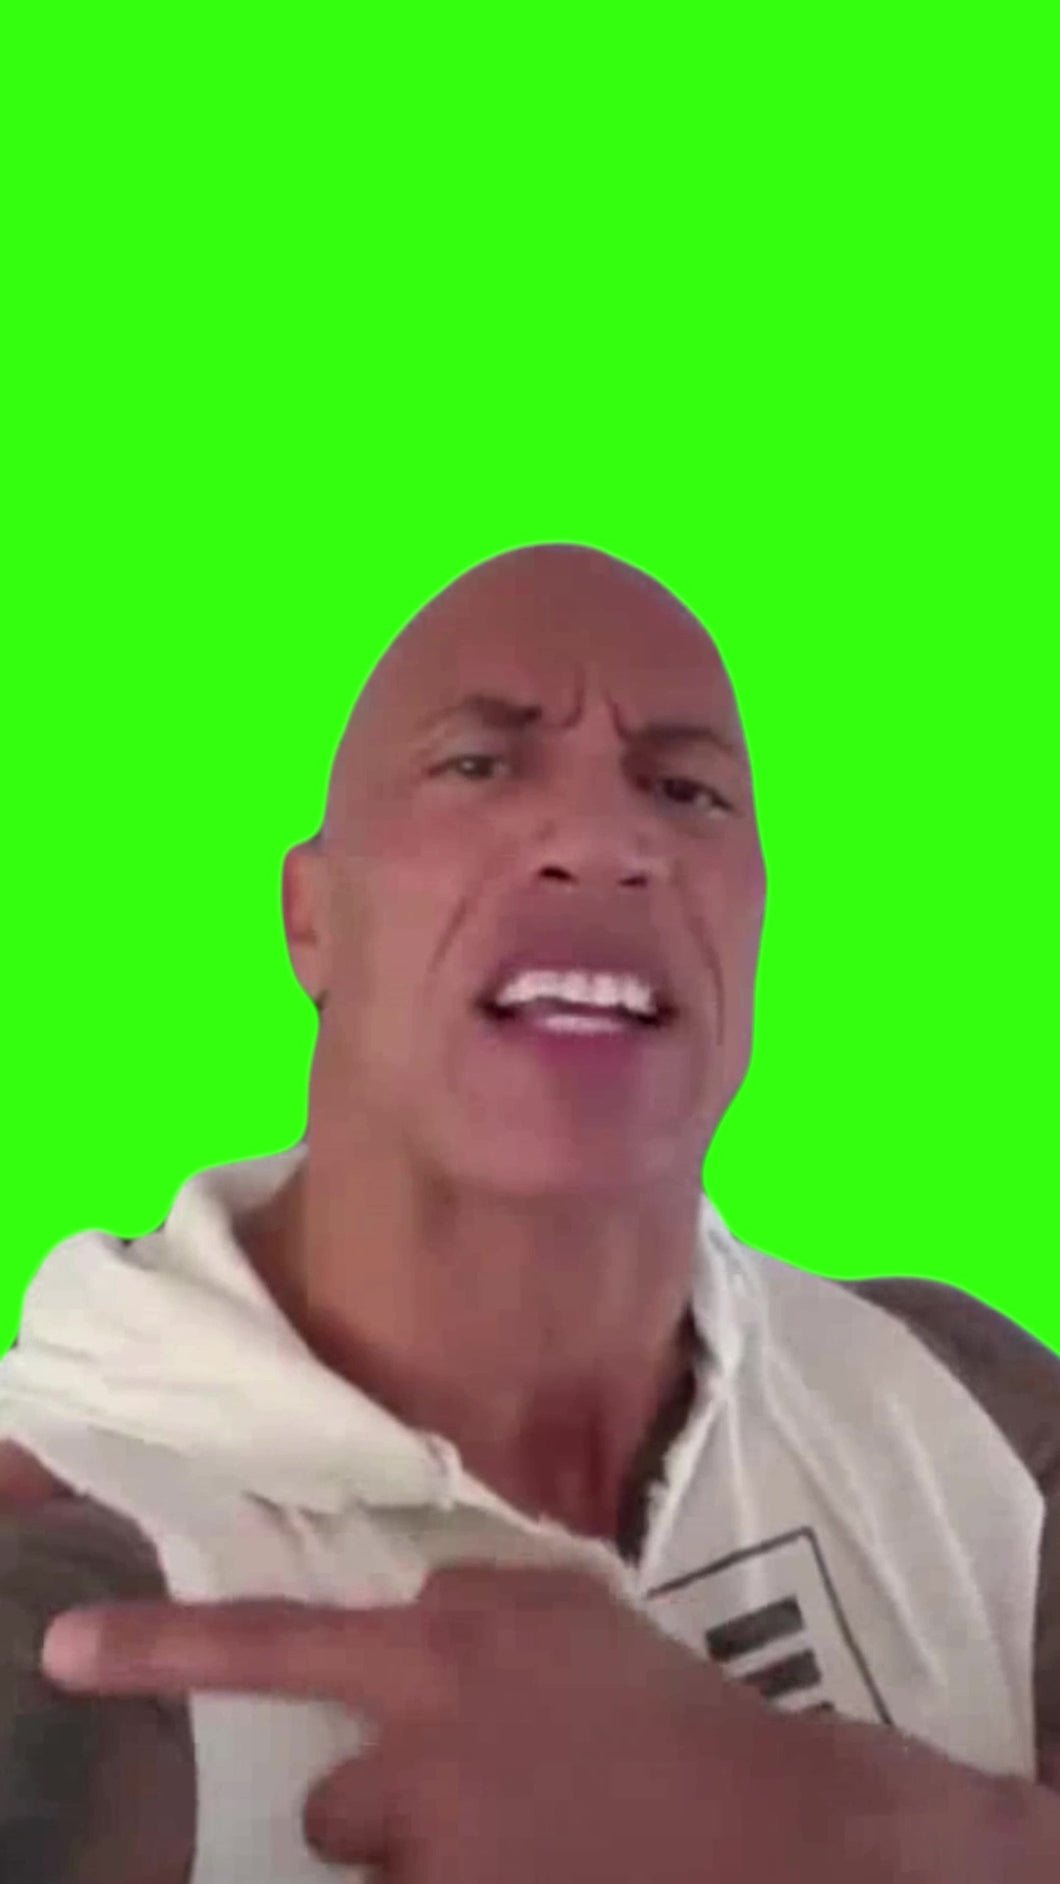 The Rock Eyebrow Meme Download